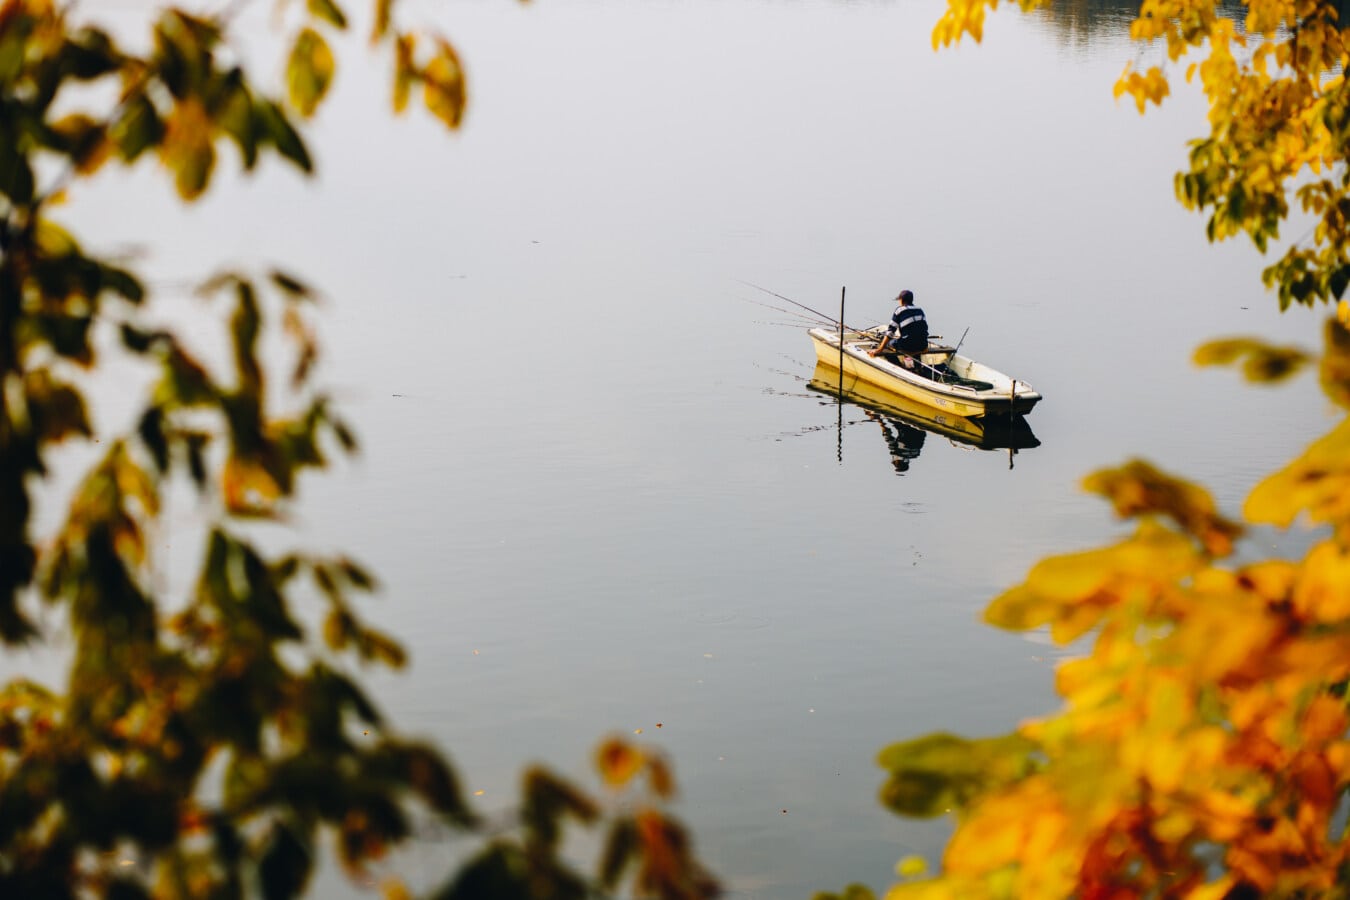 štap za ribolov, ribarski brod, ribar, udaljenost, jezero pejzaž, jesen, list, priroda, voda, na otvorenom